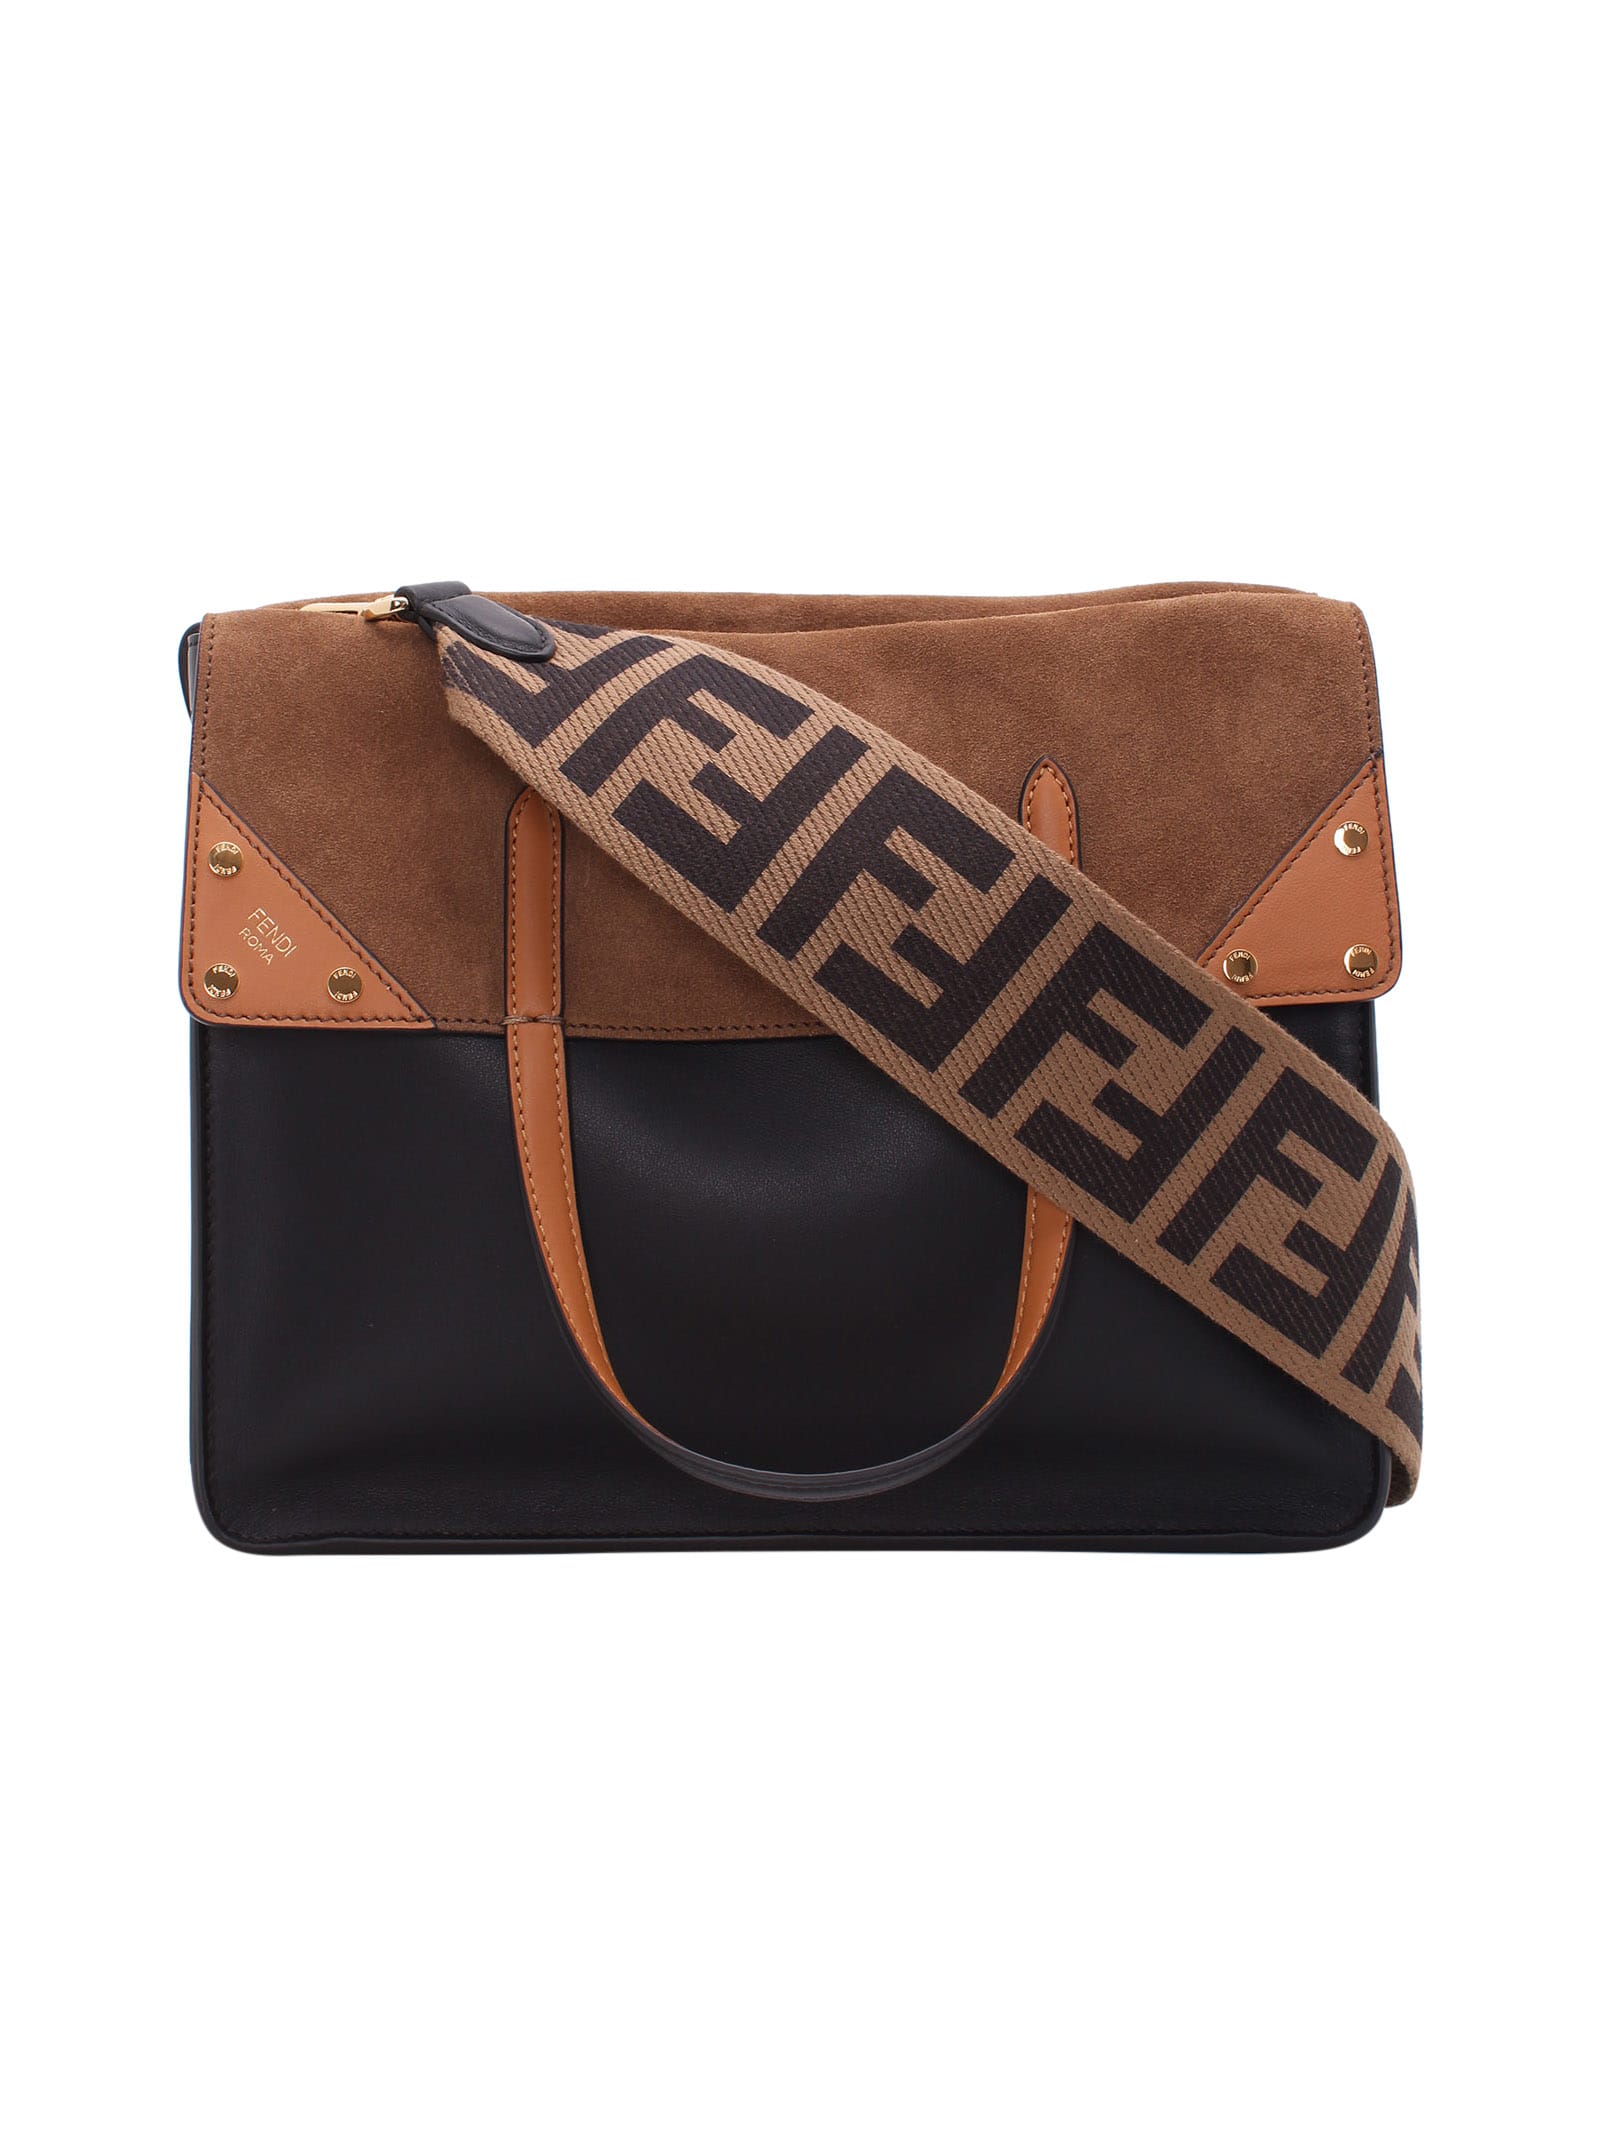 Fendi Leather Bag In Brown